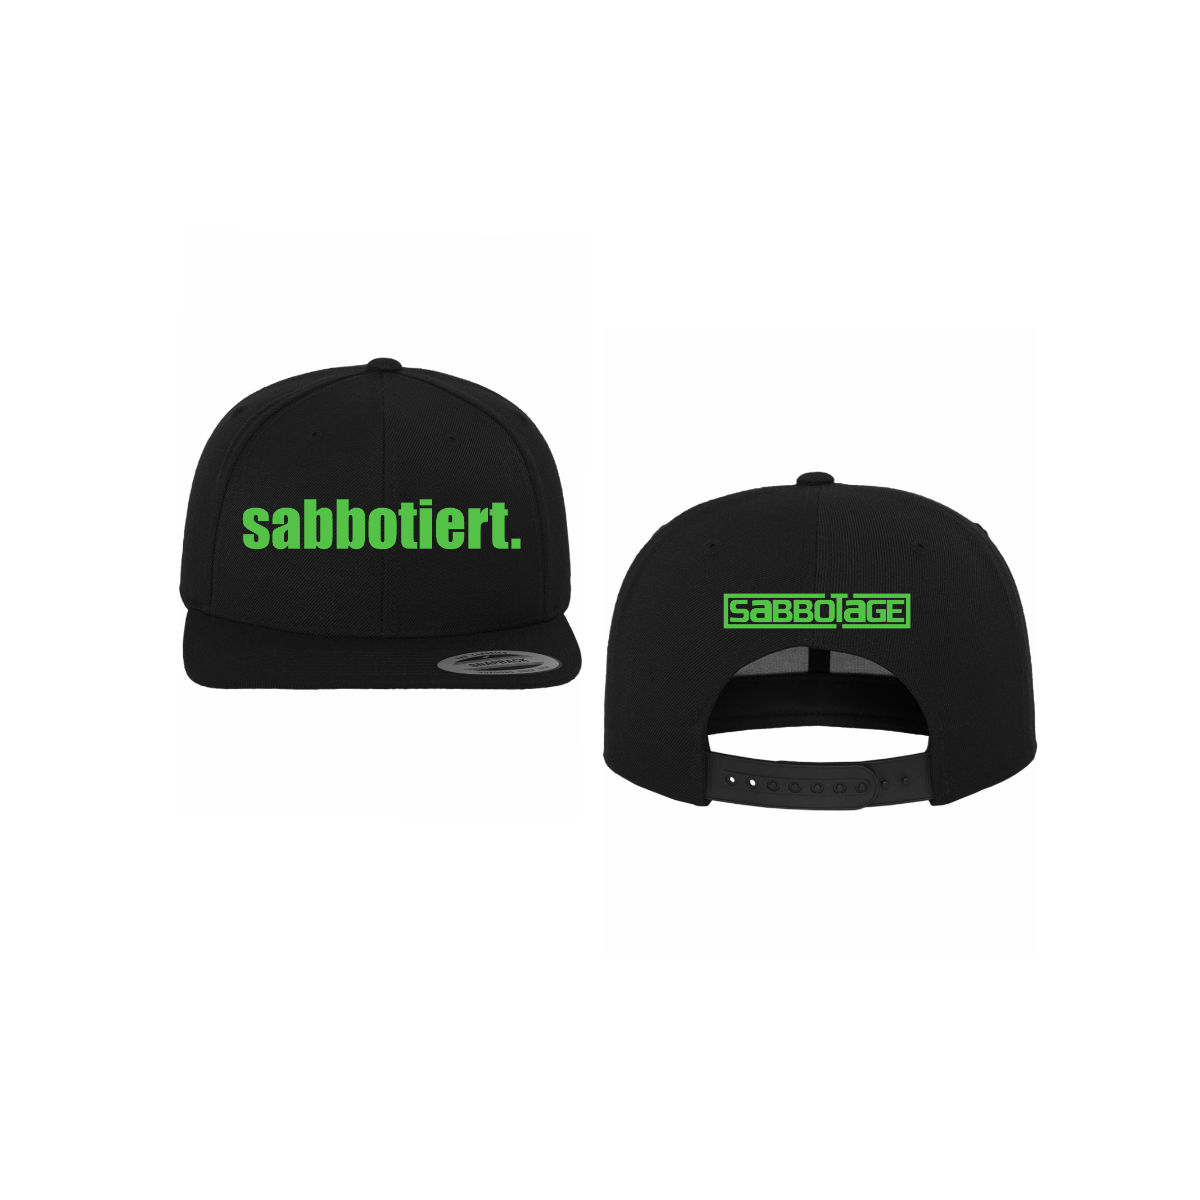 Snapback-Cap "SABBOTIERT." schwarz, bestickt